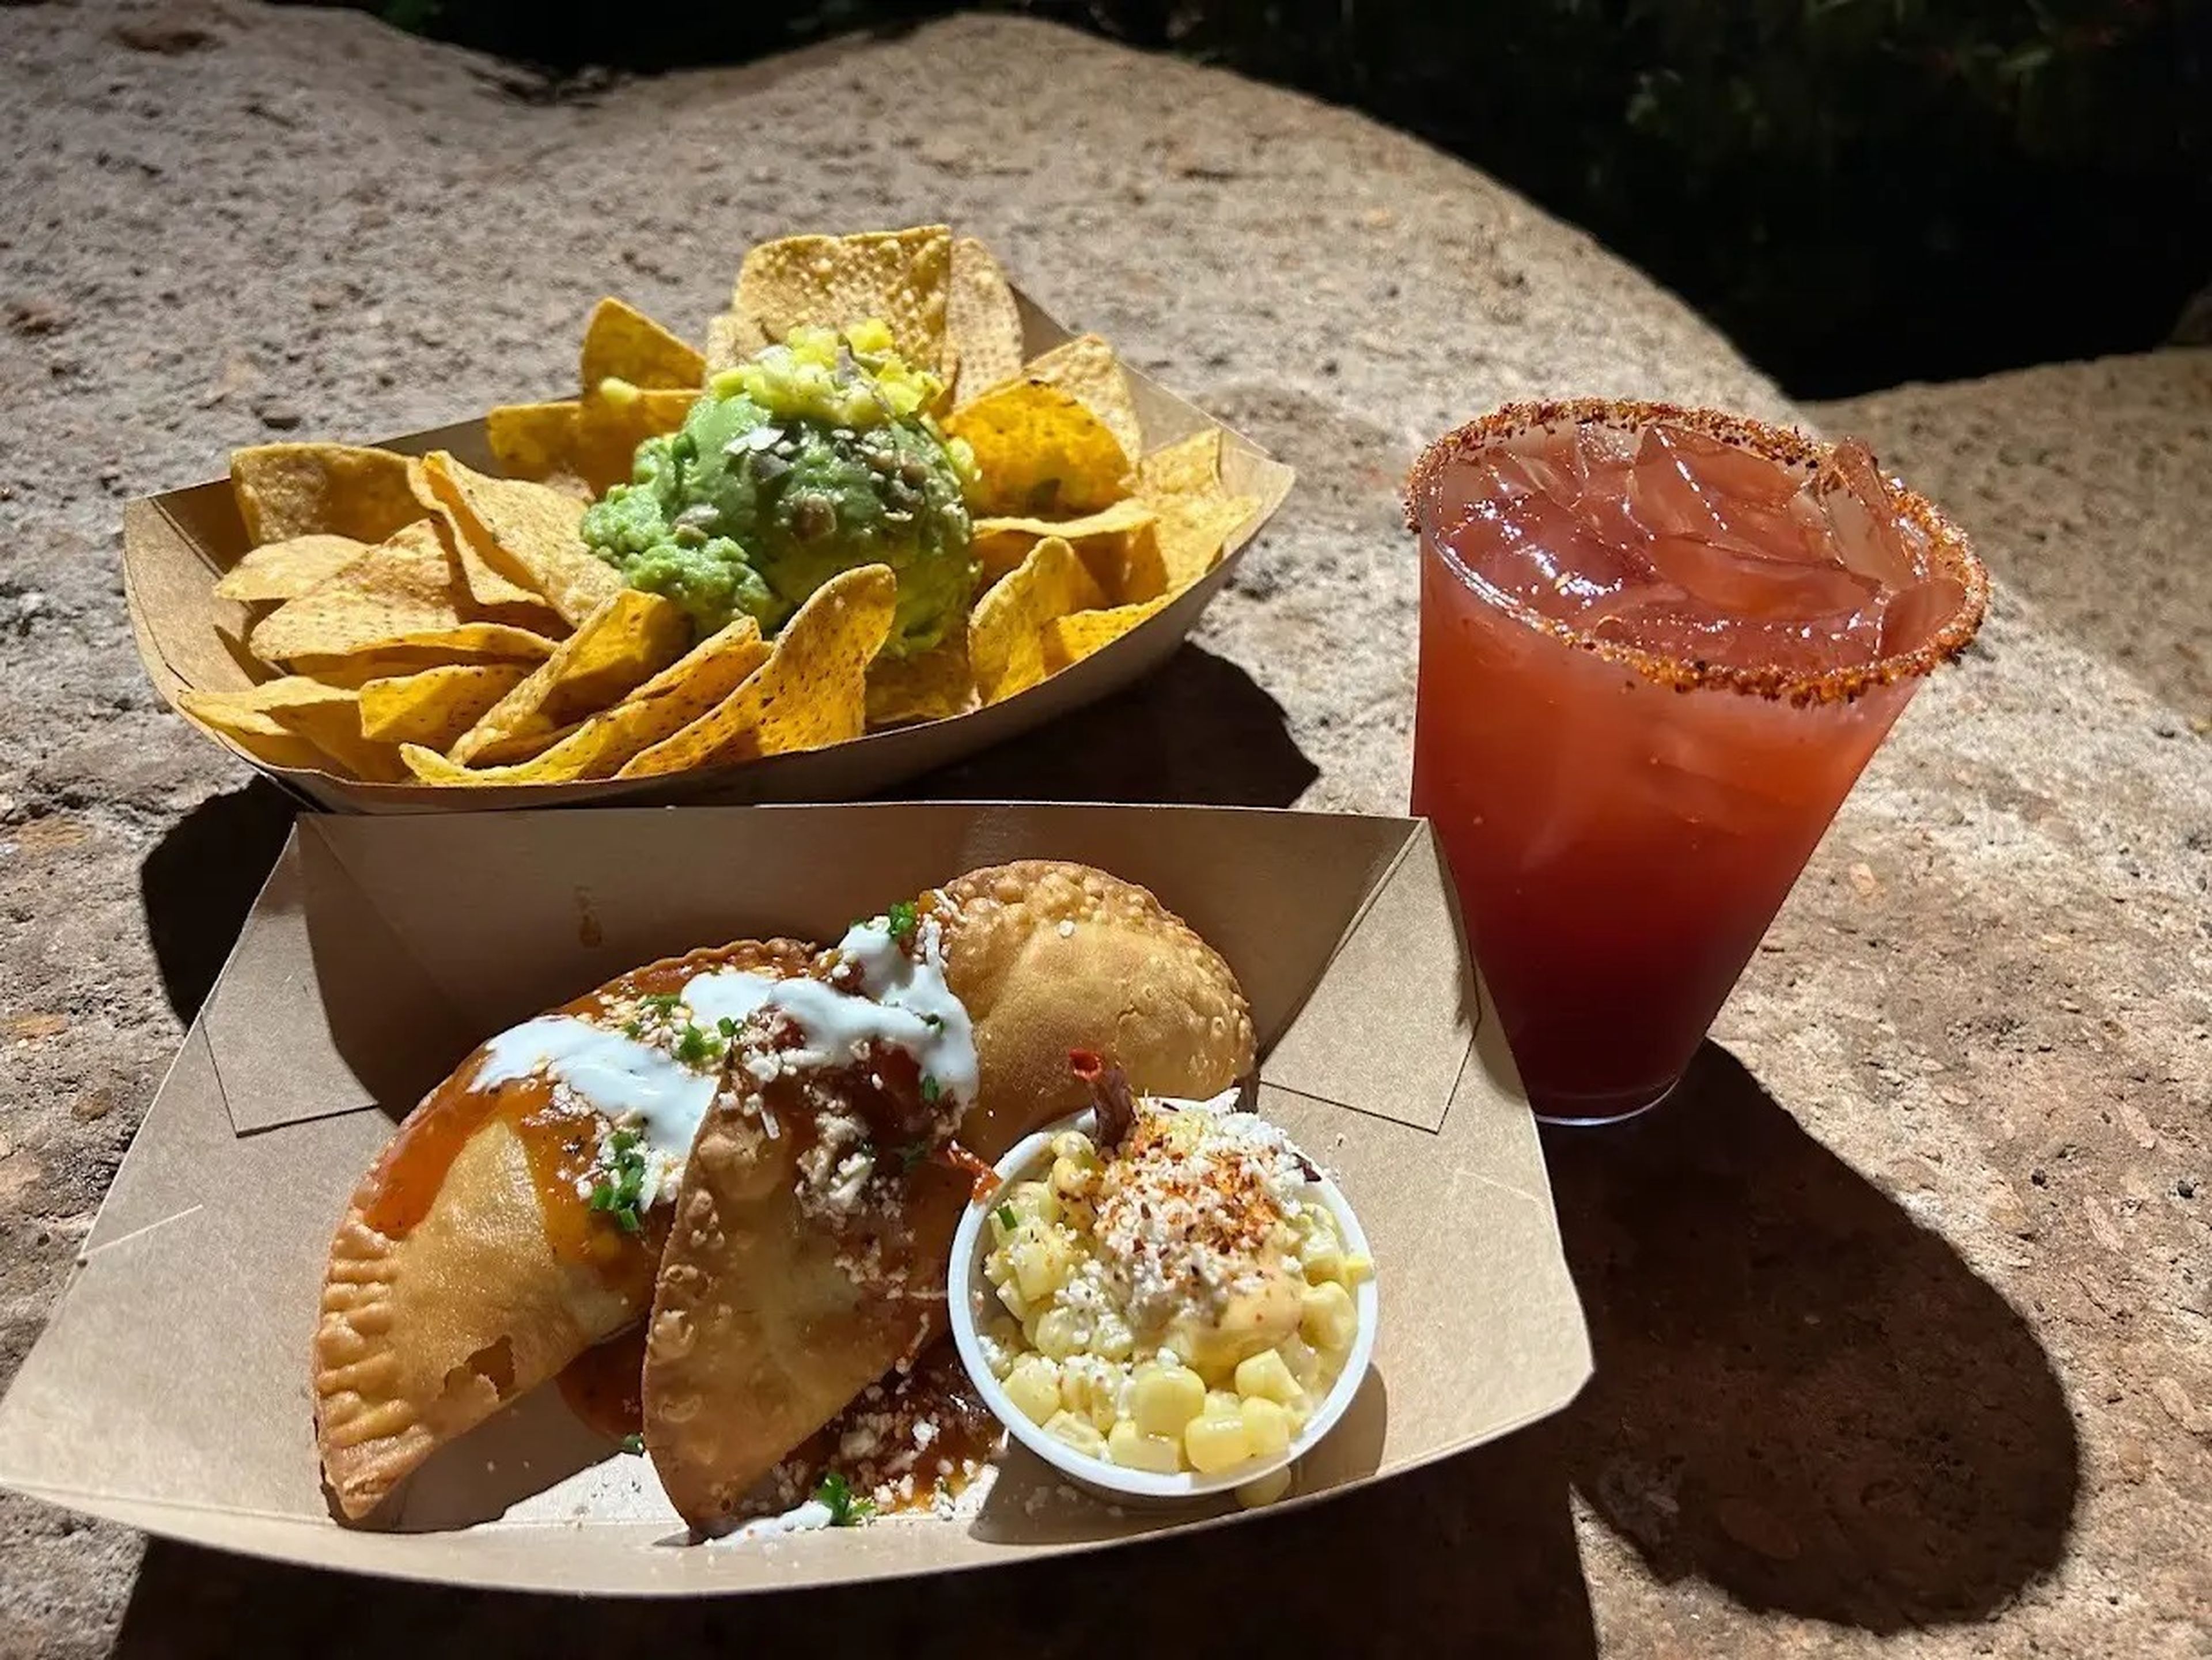 Tortilla chips, cocktail, and empanadas at Disney World 